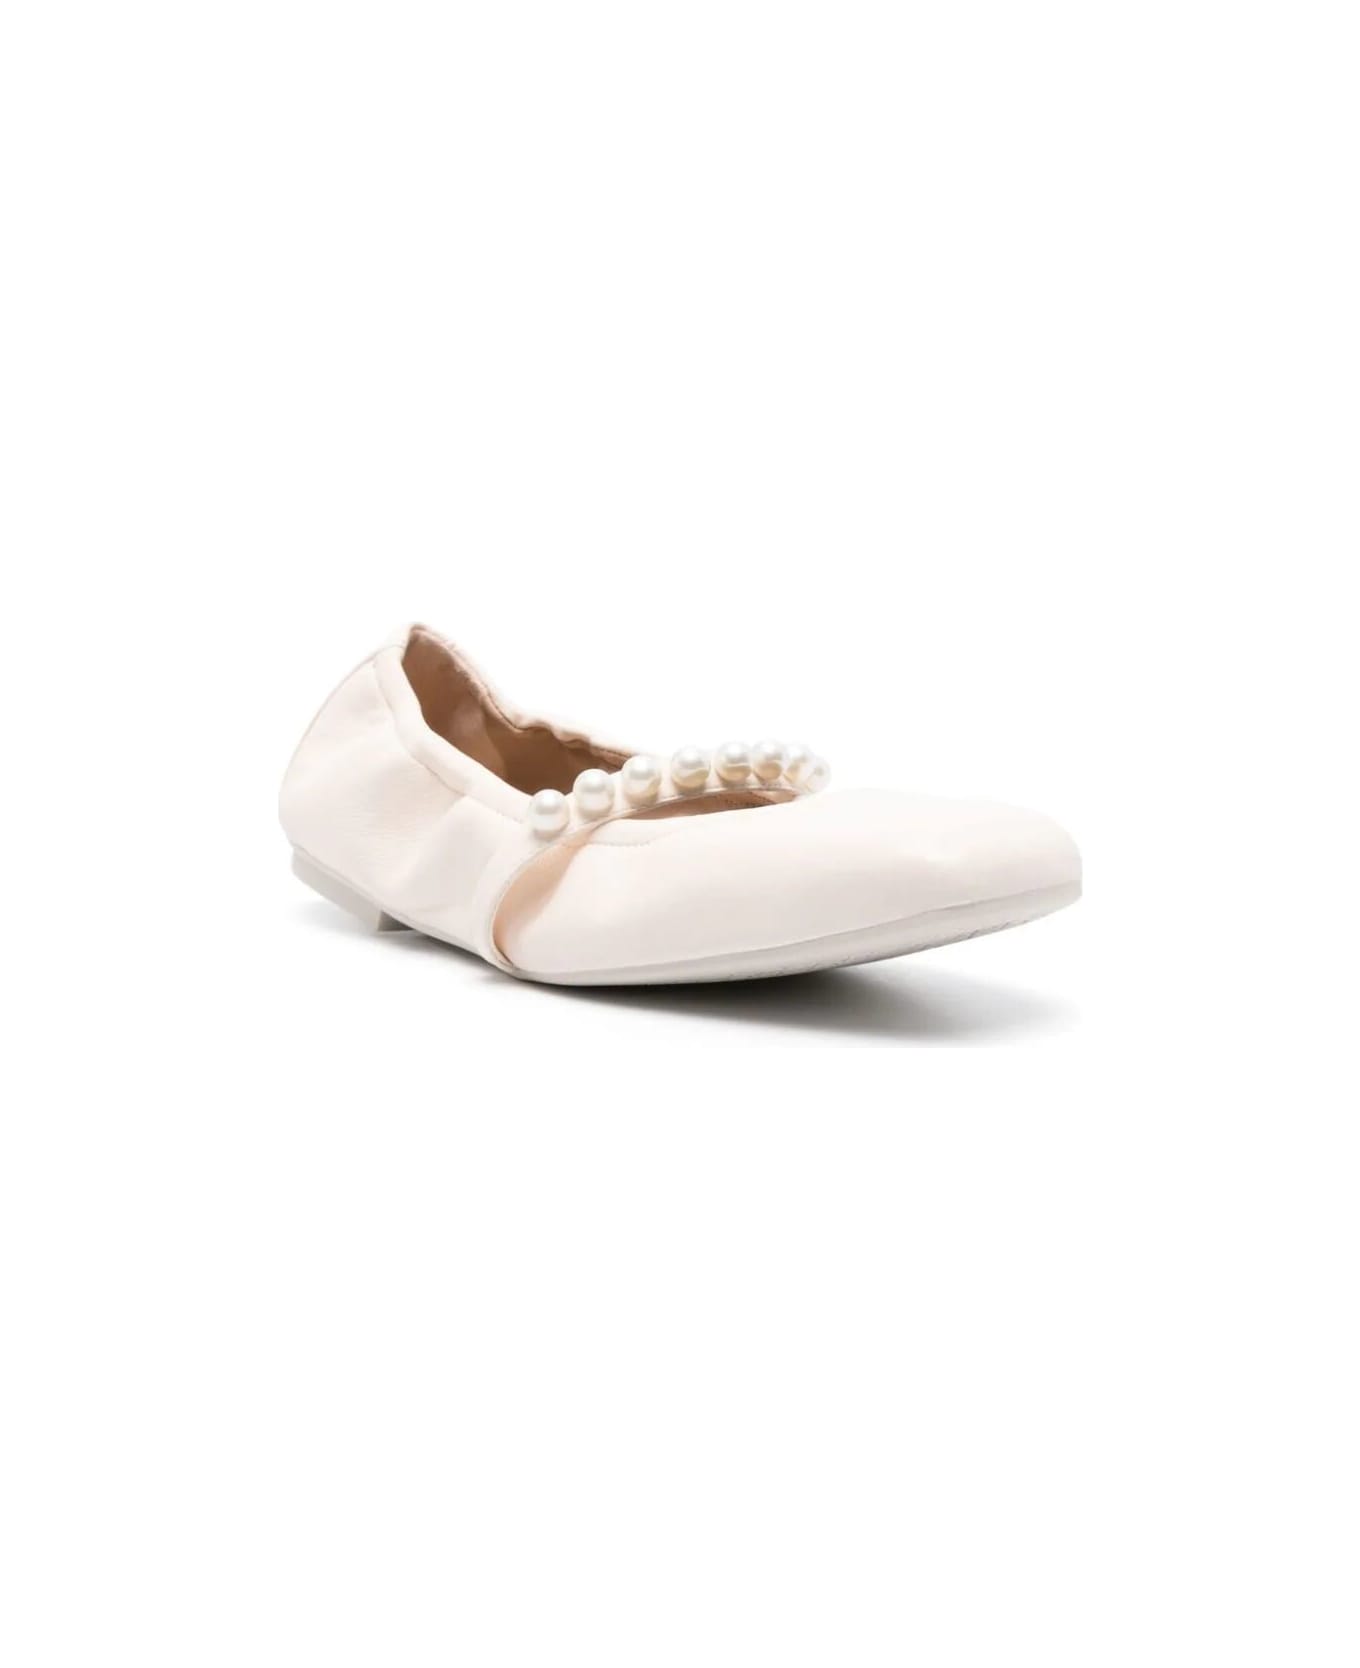 Stuart Weitzman Goldie Ballet Flat - Seashell フラットシューズ